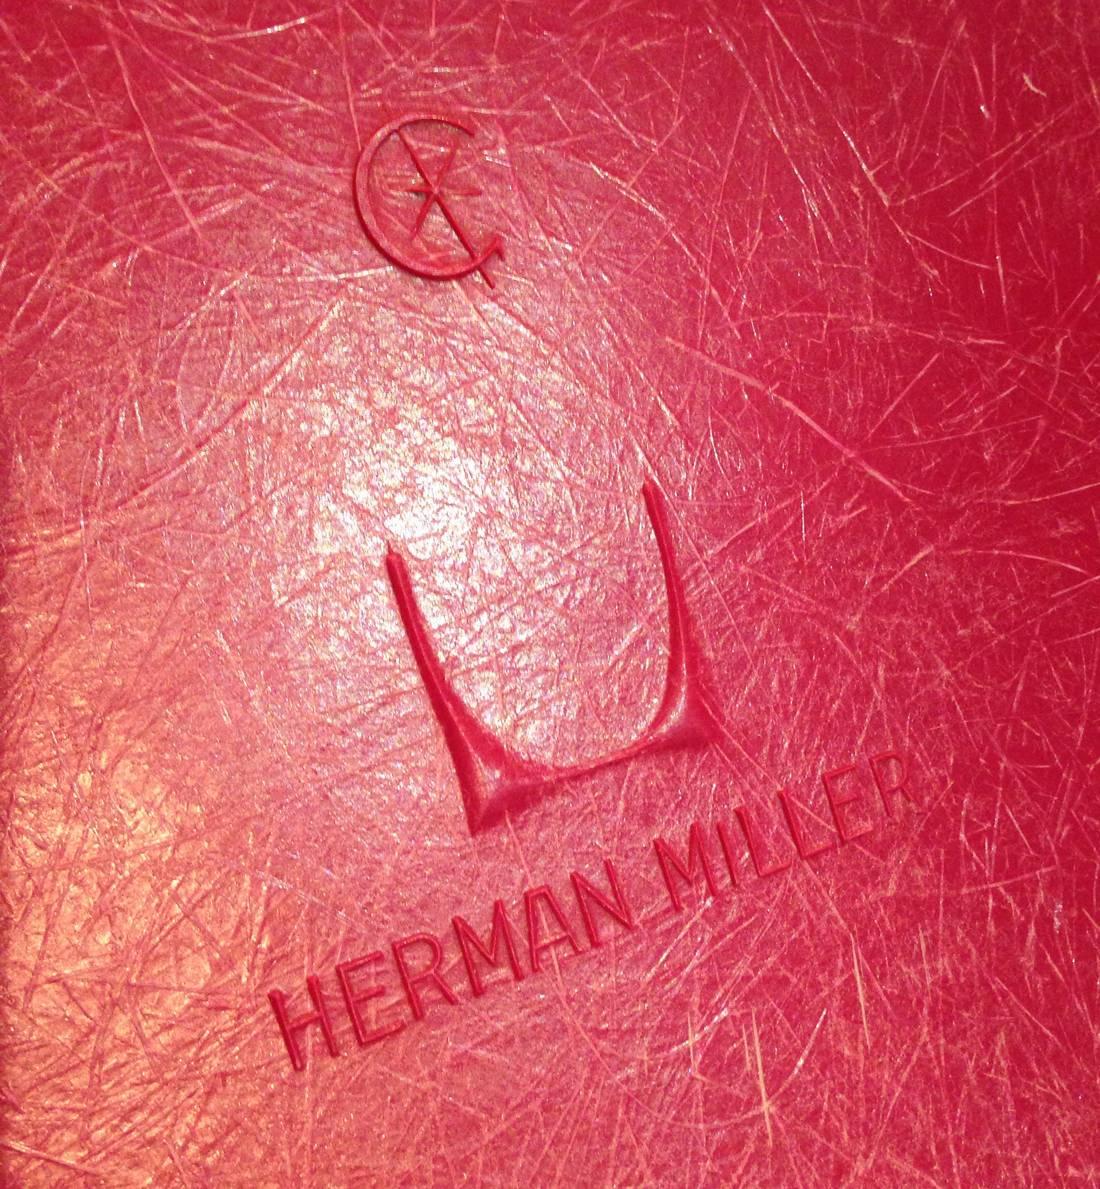 herman miller pink chair